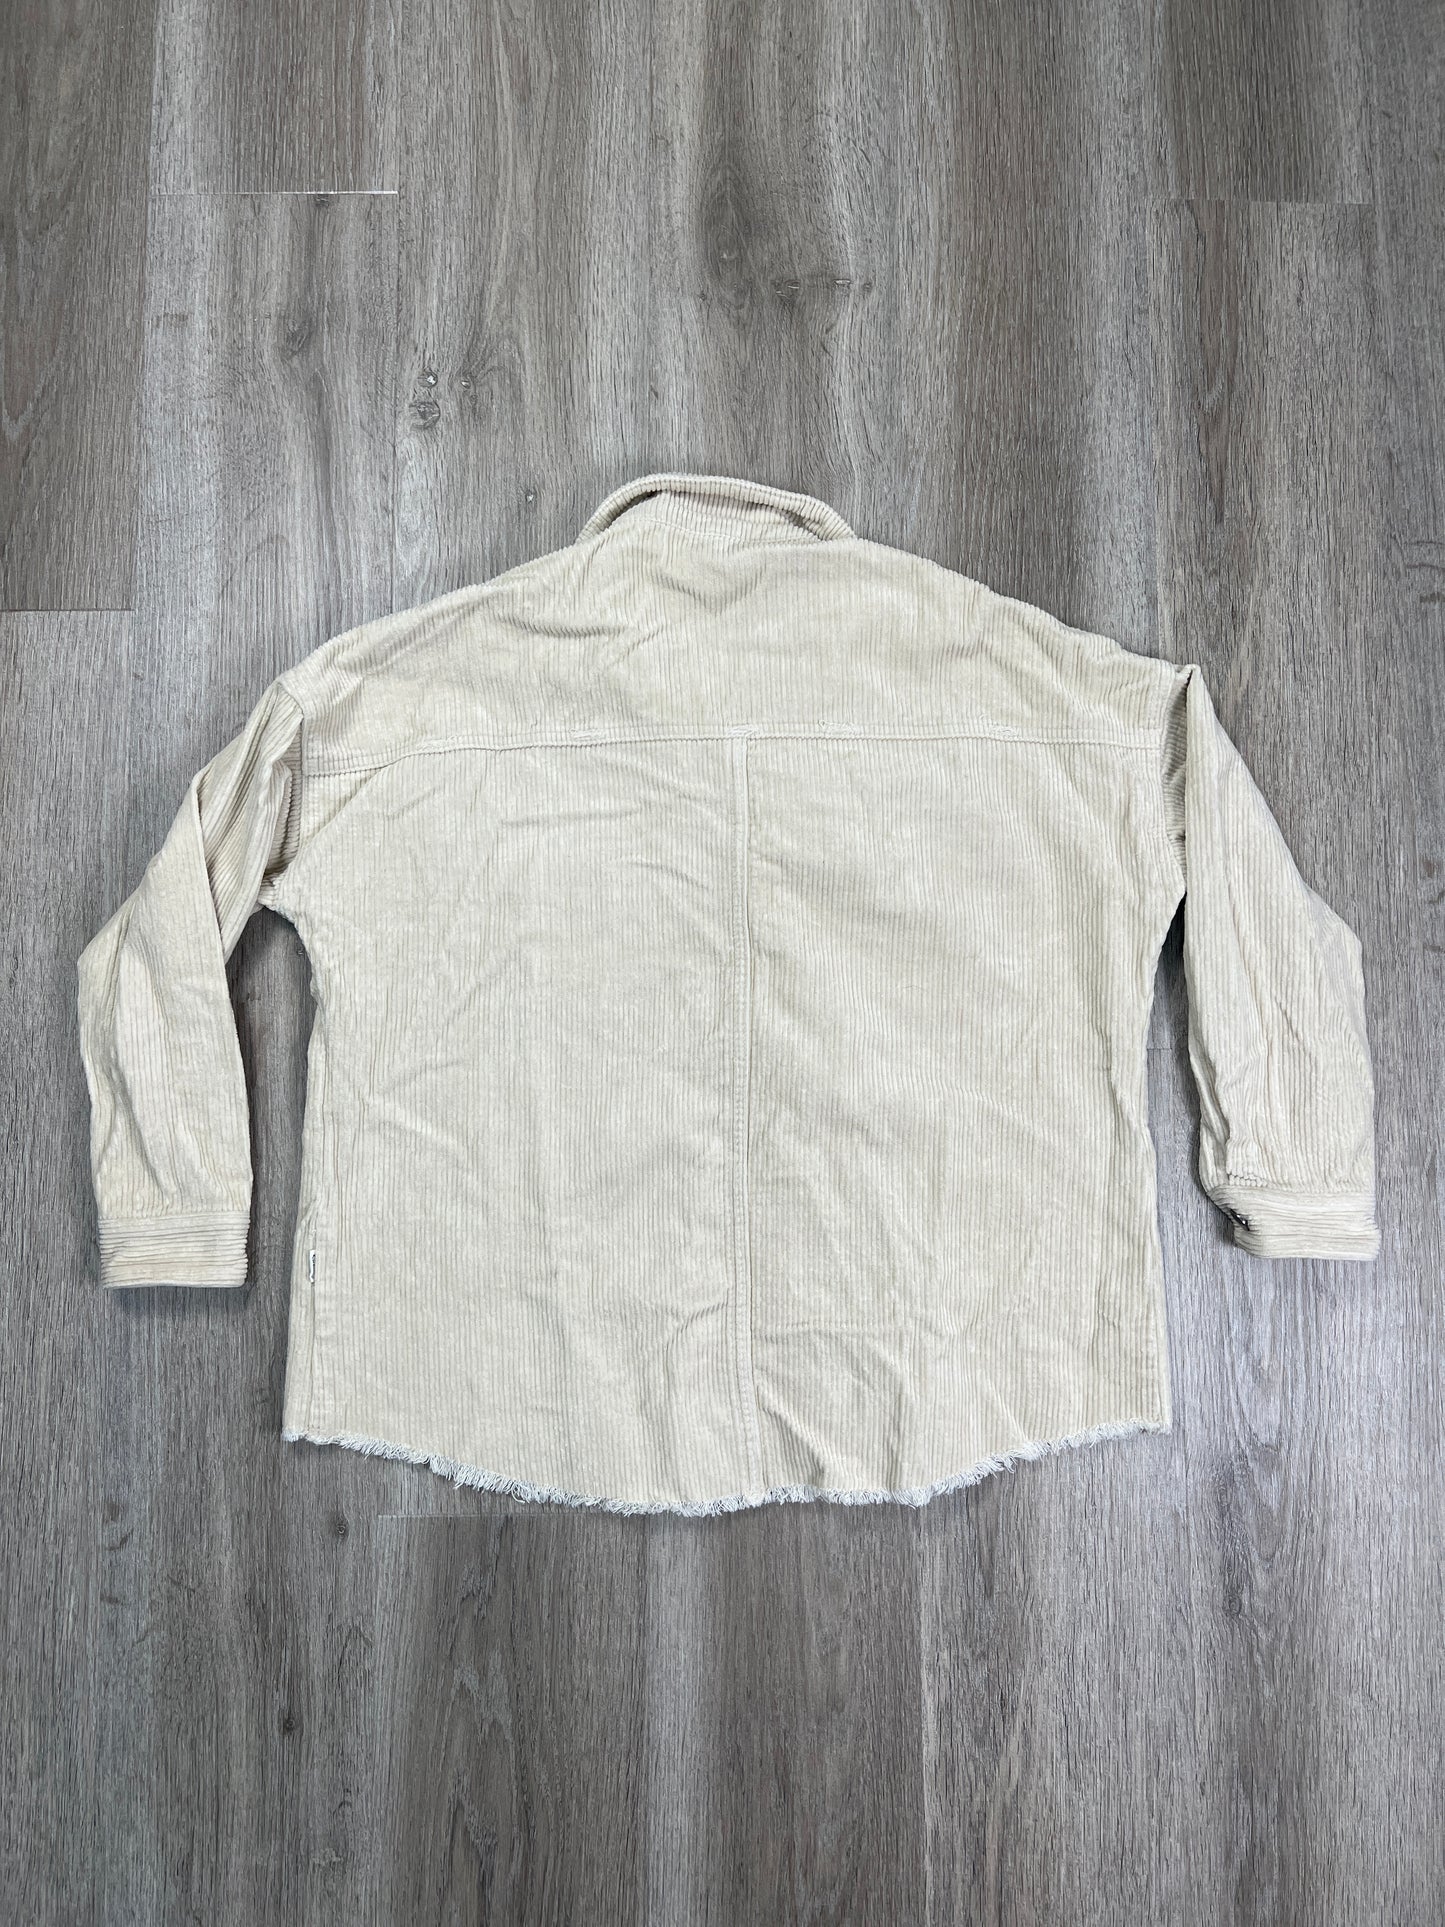 Jacket Shirt By Bohme  Size: S